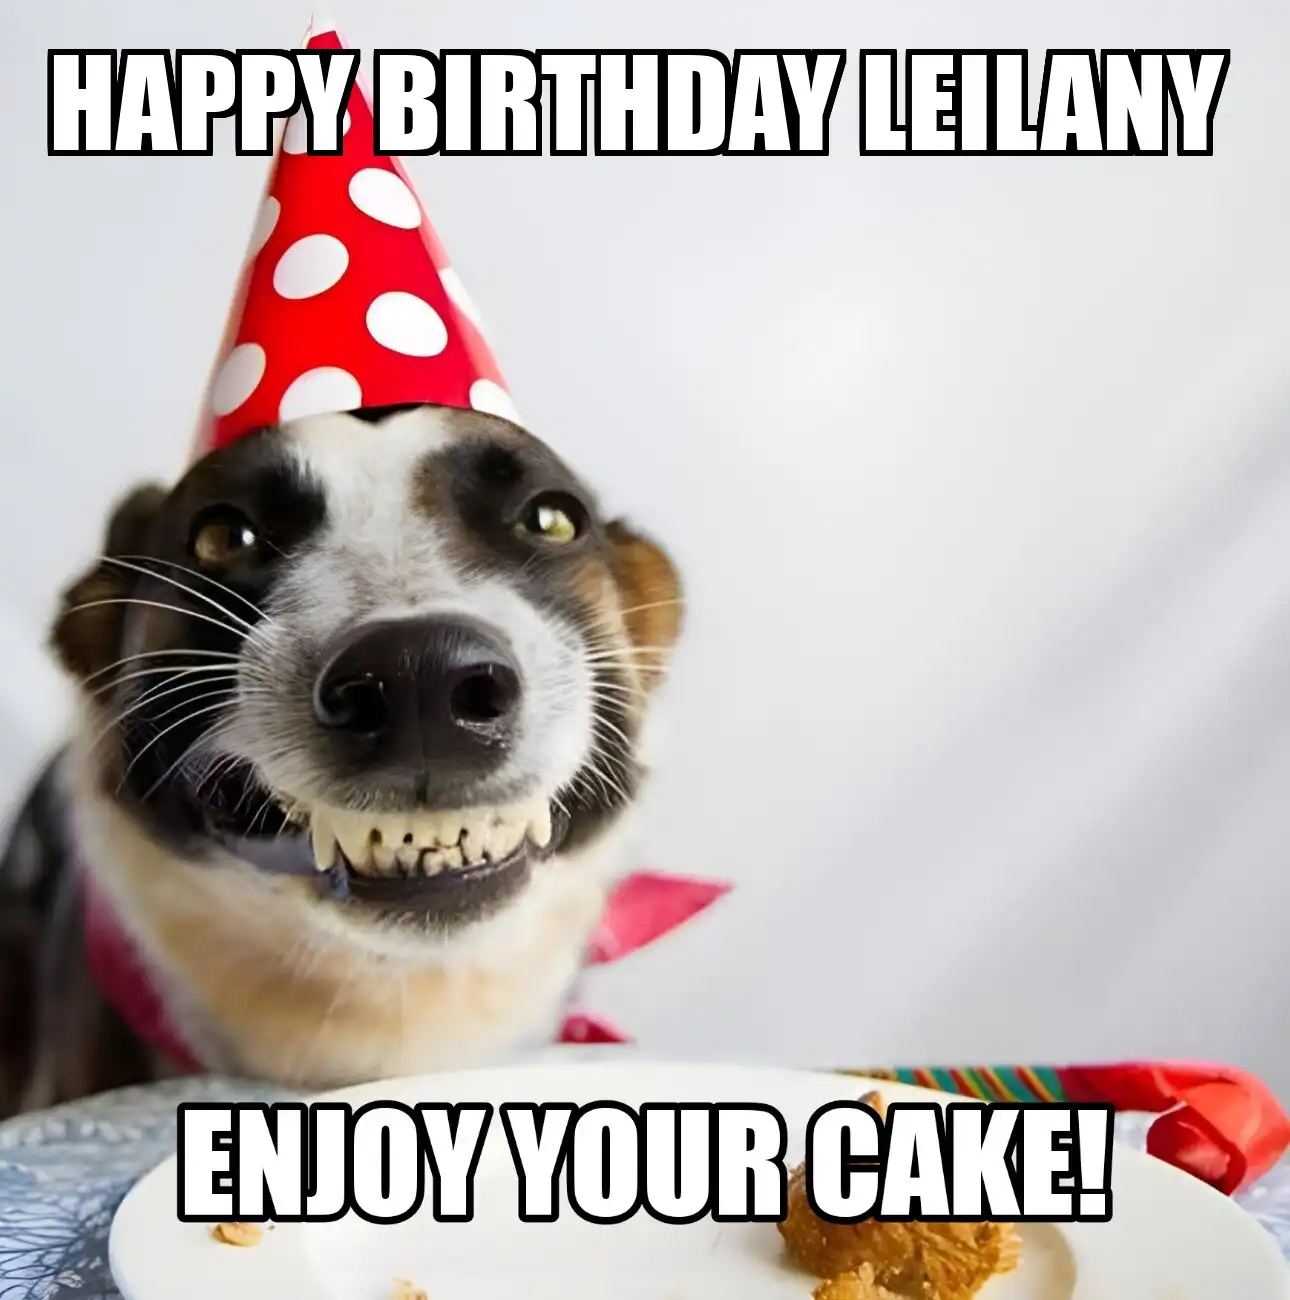 Happy Birthday Leilany Enjoy Your Cake Dog Meme